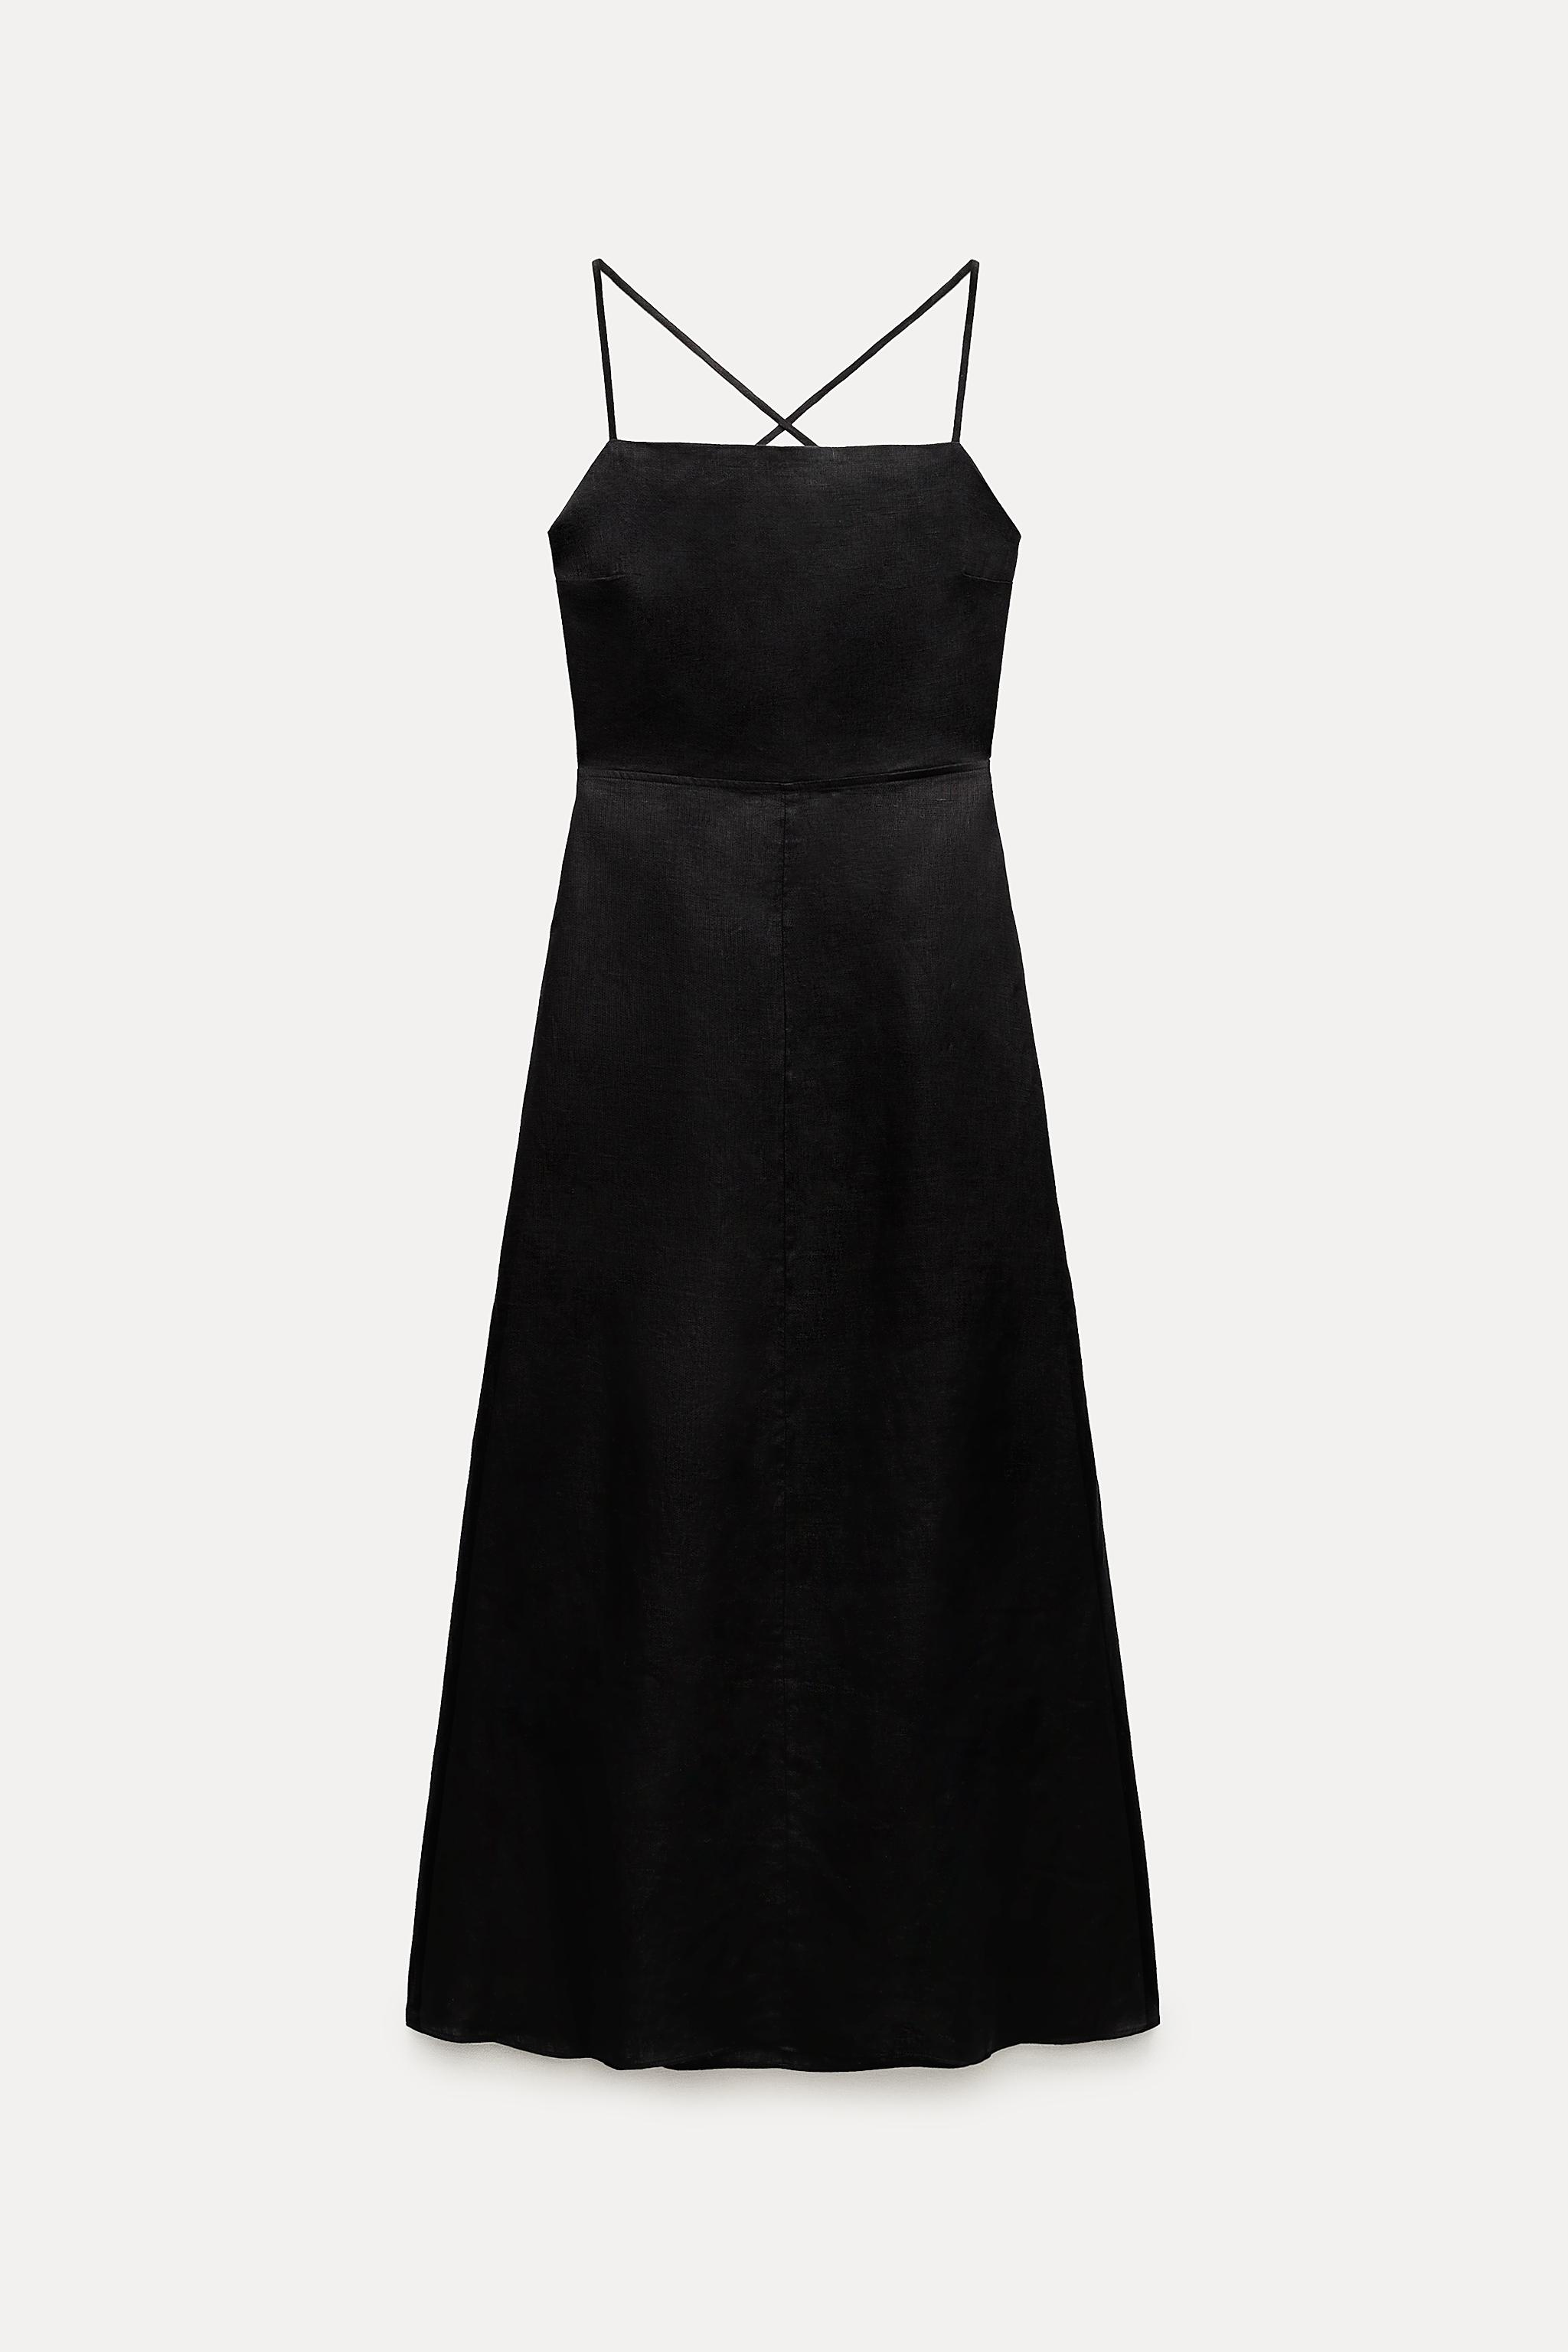 Loose dress in 100% linen, Black dress, McVERDI